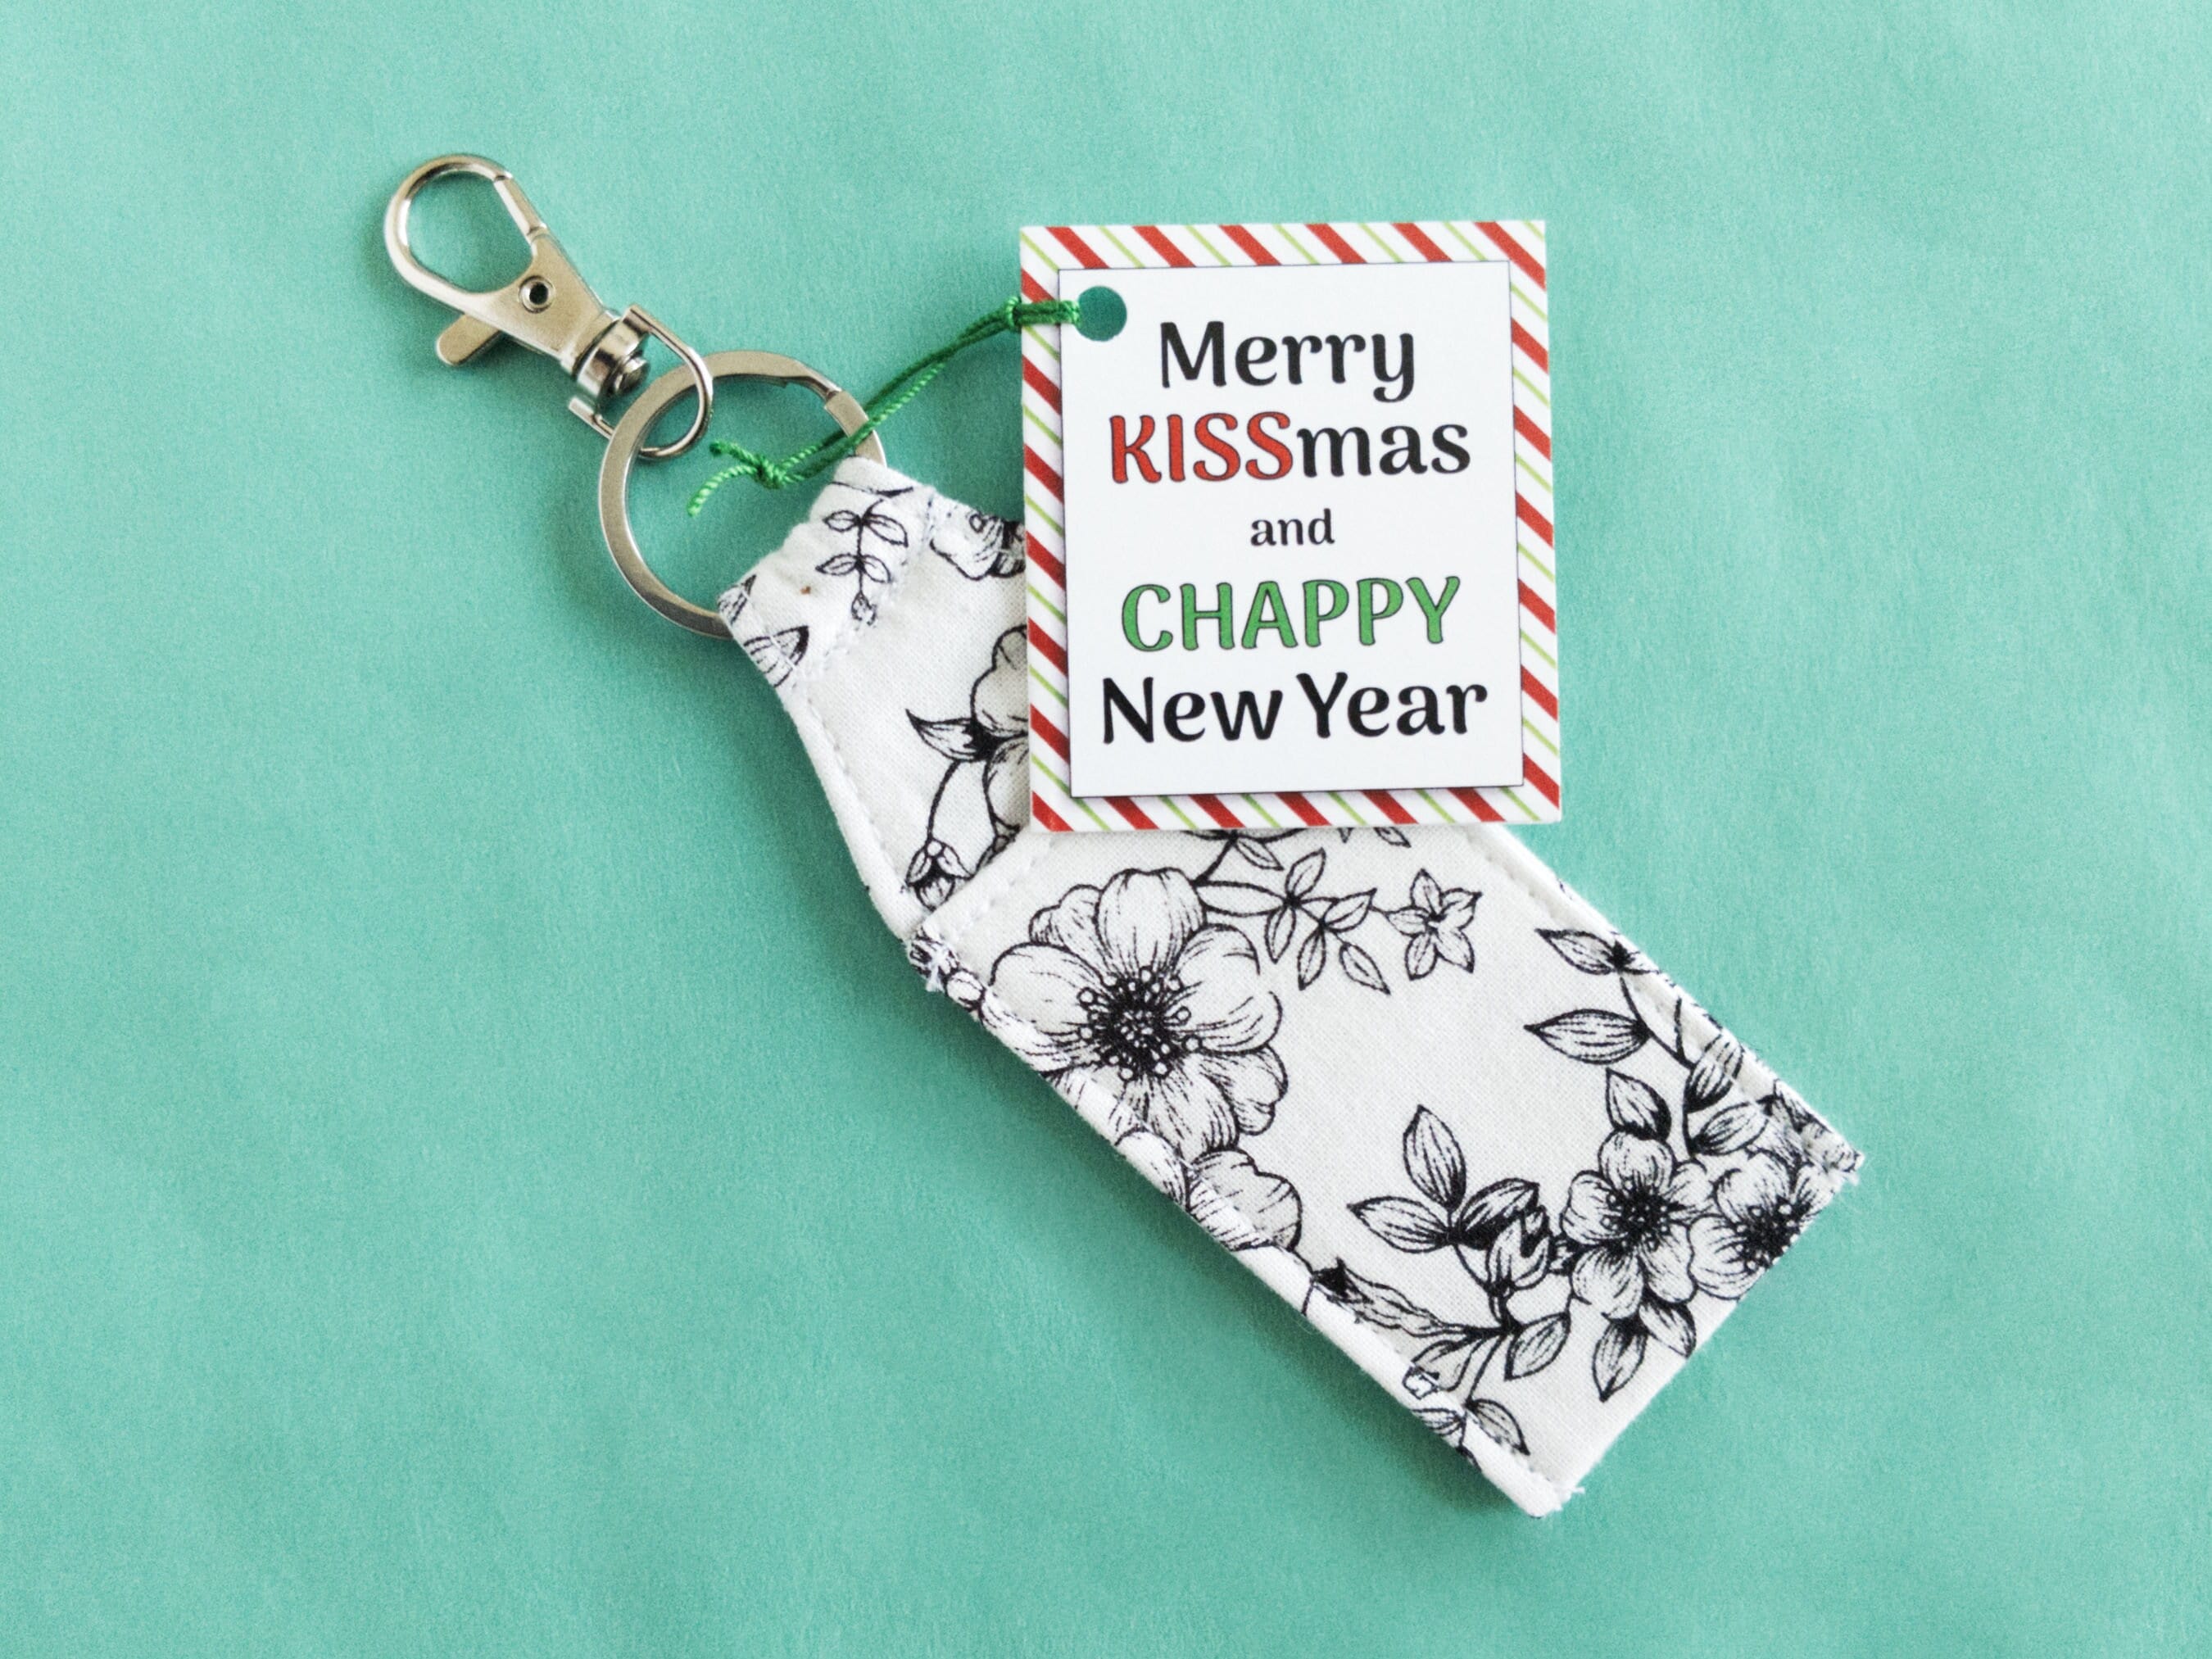  Christmas Stocking Stuffer - Chapstick Holder - Bulk Gifts -  Under 5 Dollars - Set of 6 Lip Balm Keychains - Teacher Gift - Coworker  Gifts : Handmade Products